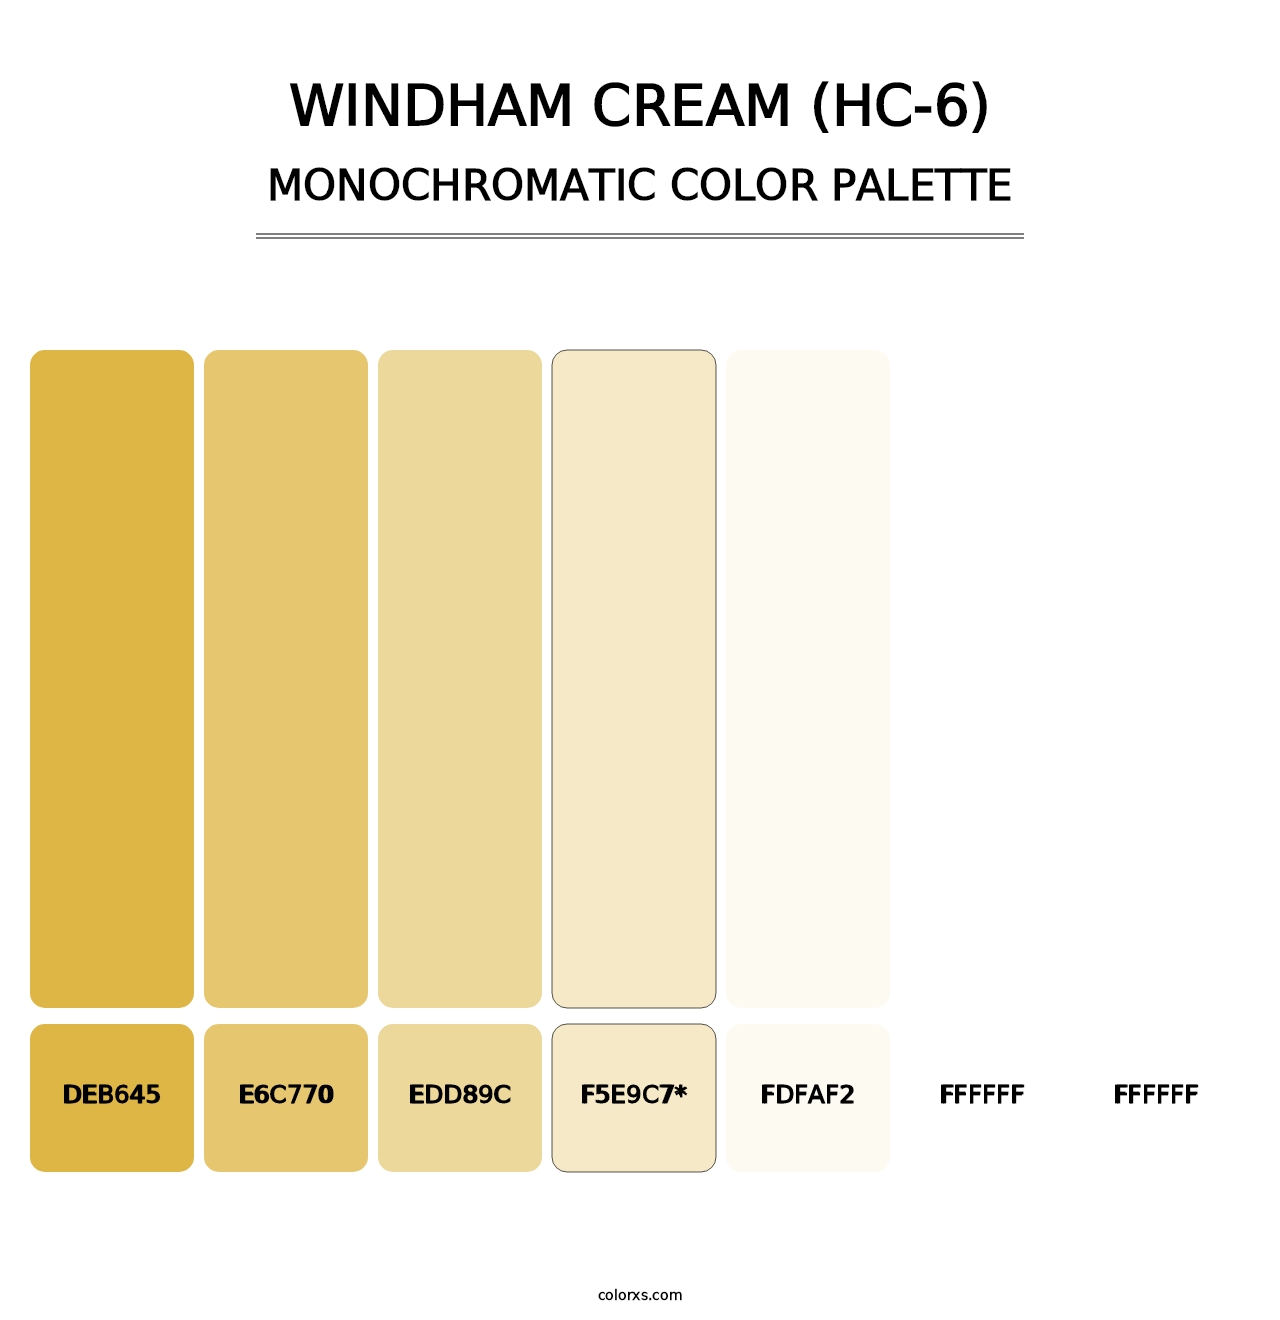 Windham Cream (HC-6) - Monochromatic Color Palette